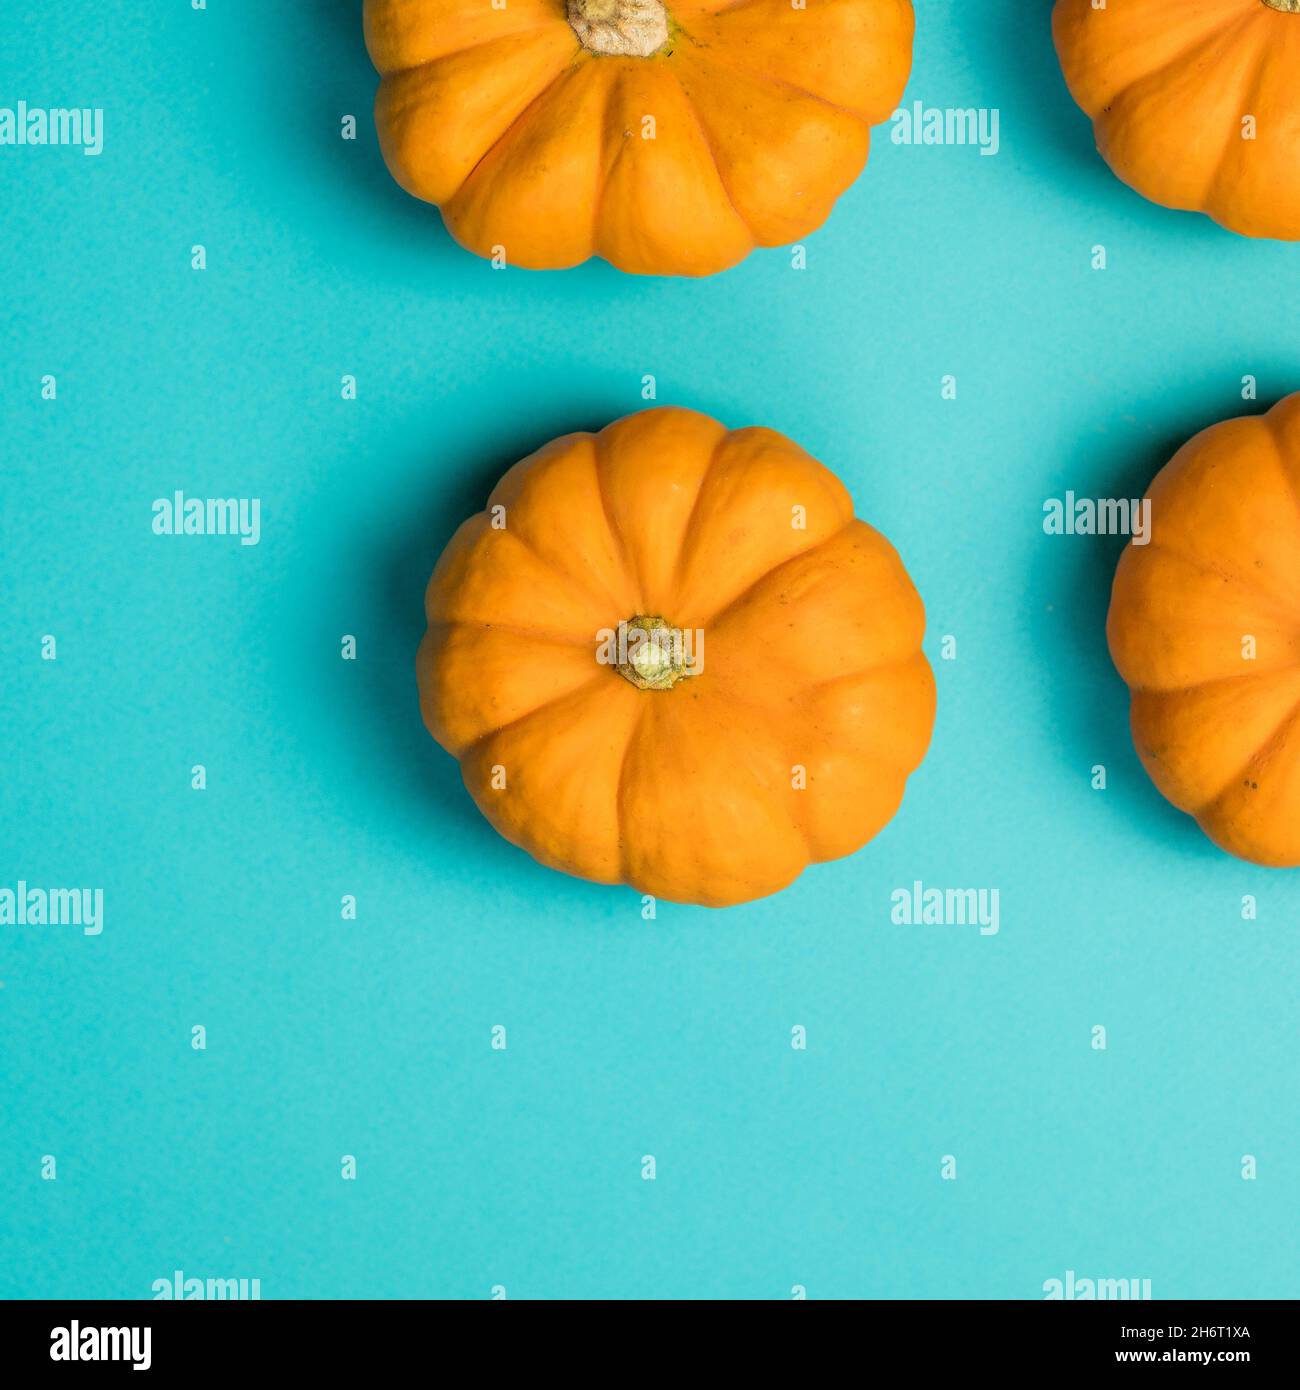 Mini orange pumpkins on teal backdrop Stock Photo